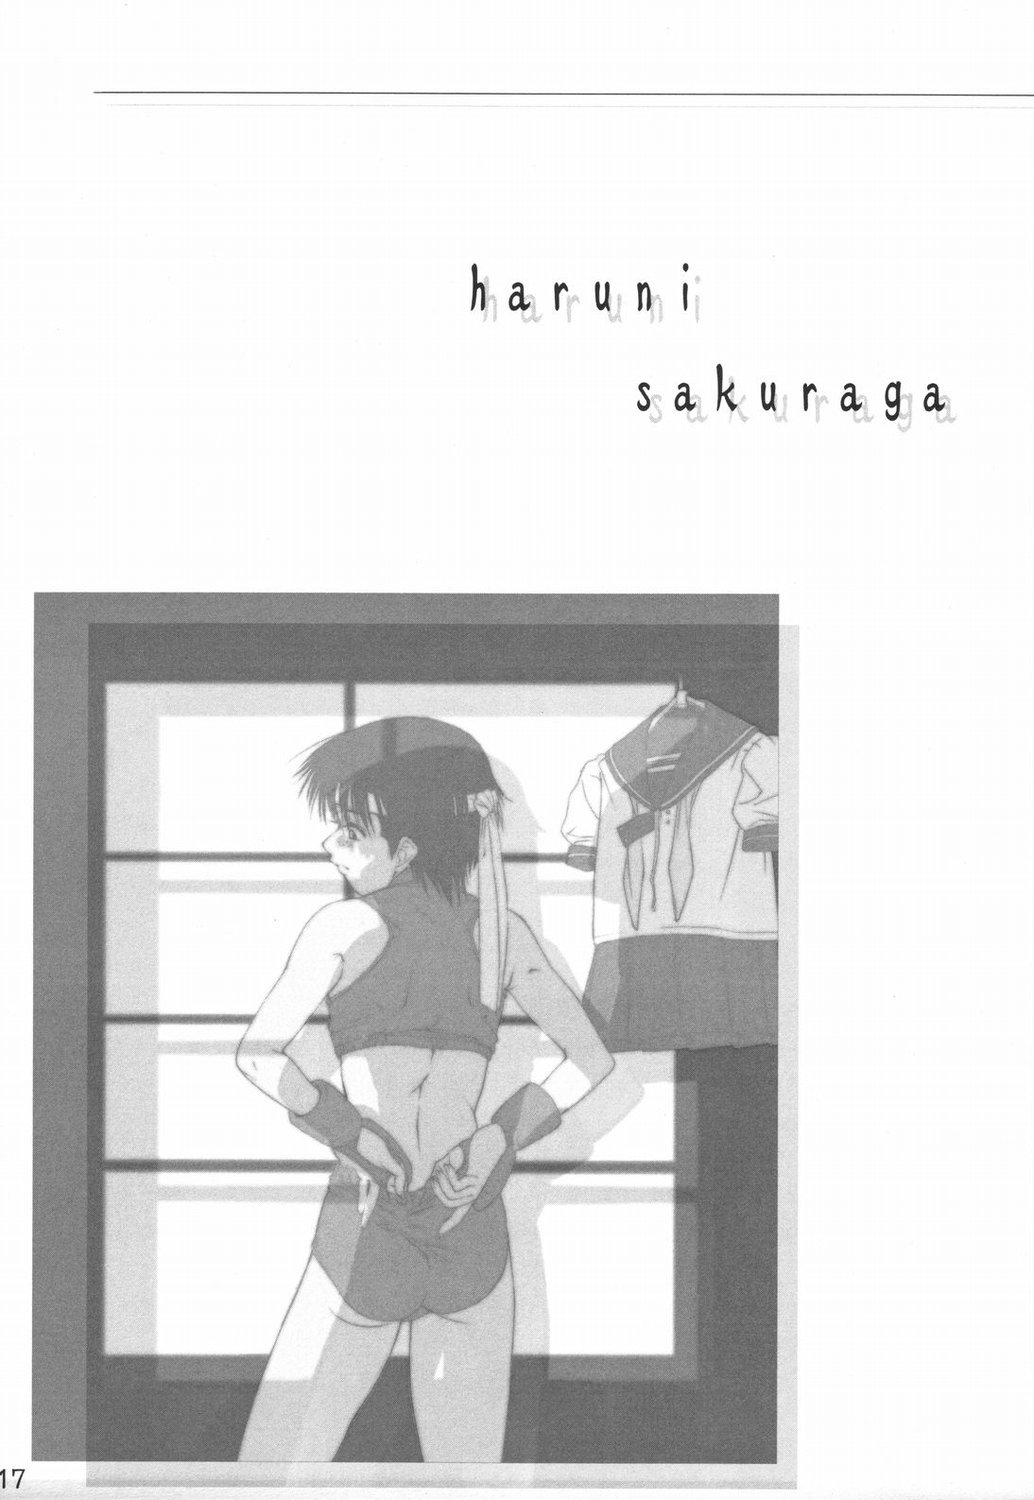 [HARNESS] Haruni Sakura ga(Street Fighter) 